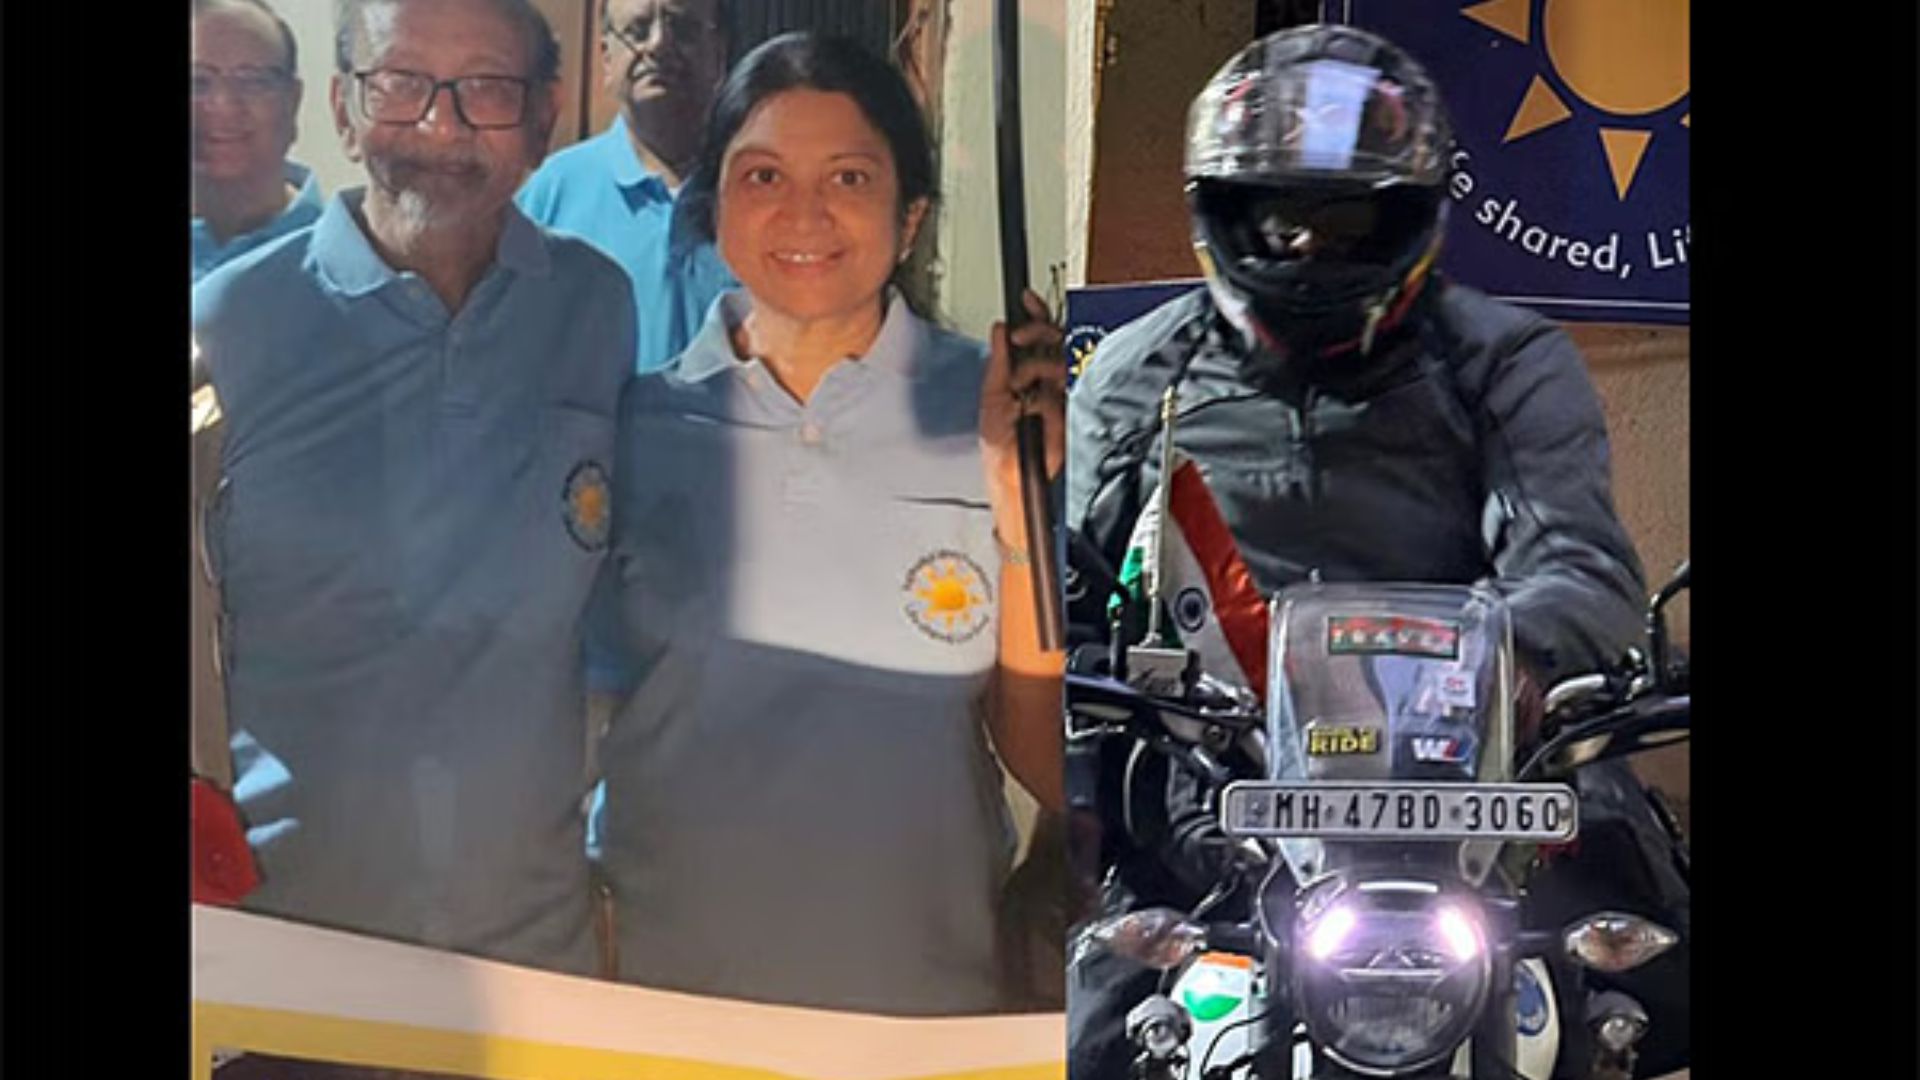 Vinod’s 2000 km Motorcycle Crusade Raises Organ Donation Awareness Amid Kidney Failure Journey